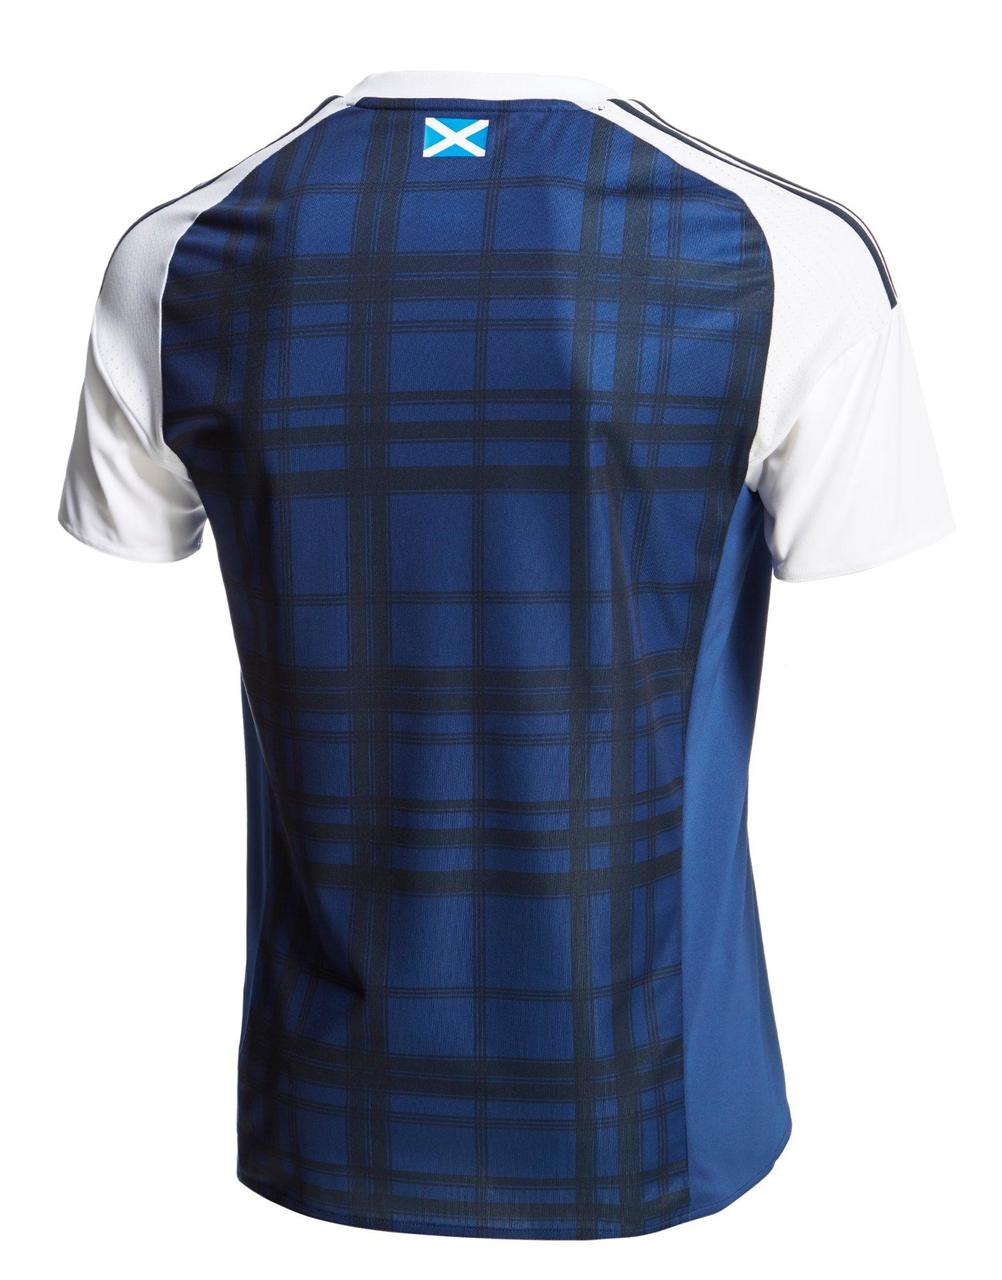 Scotland 2016 Adidas Home Kit | 15/16 Kits | Football ...